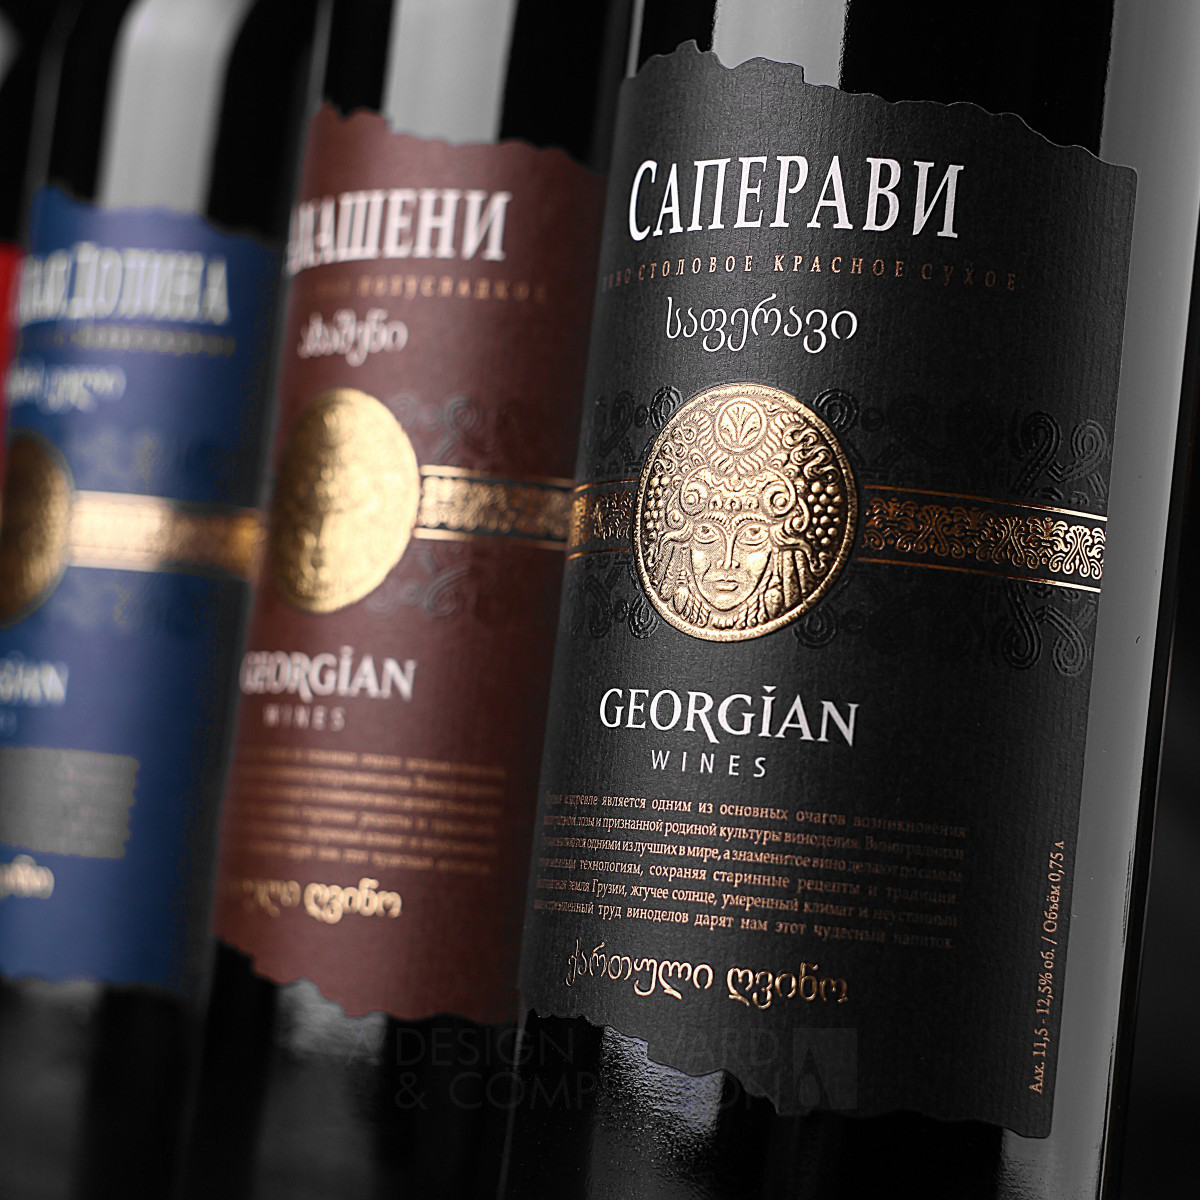 Georgian Wines Series of Georgian wines by Valerii Sumilov